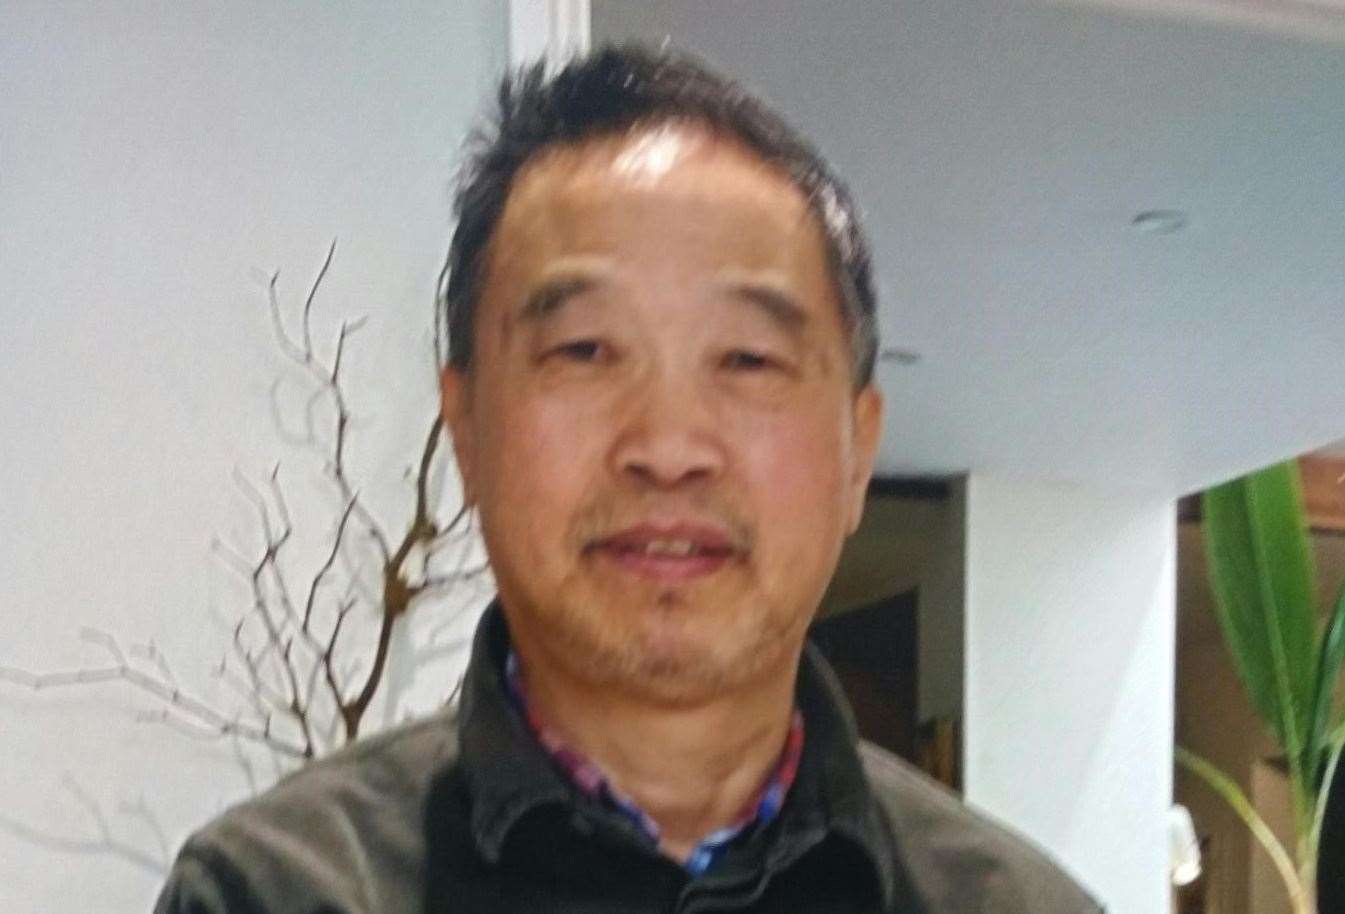 Minxin Li was last seen on Thursday morning